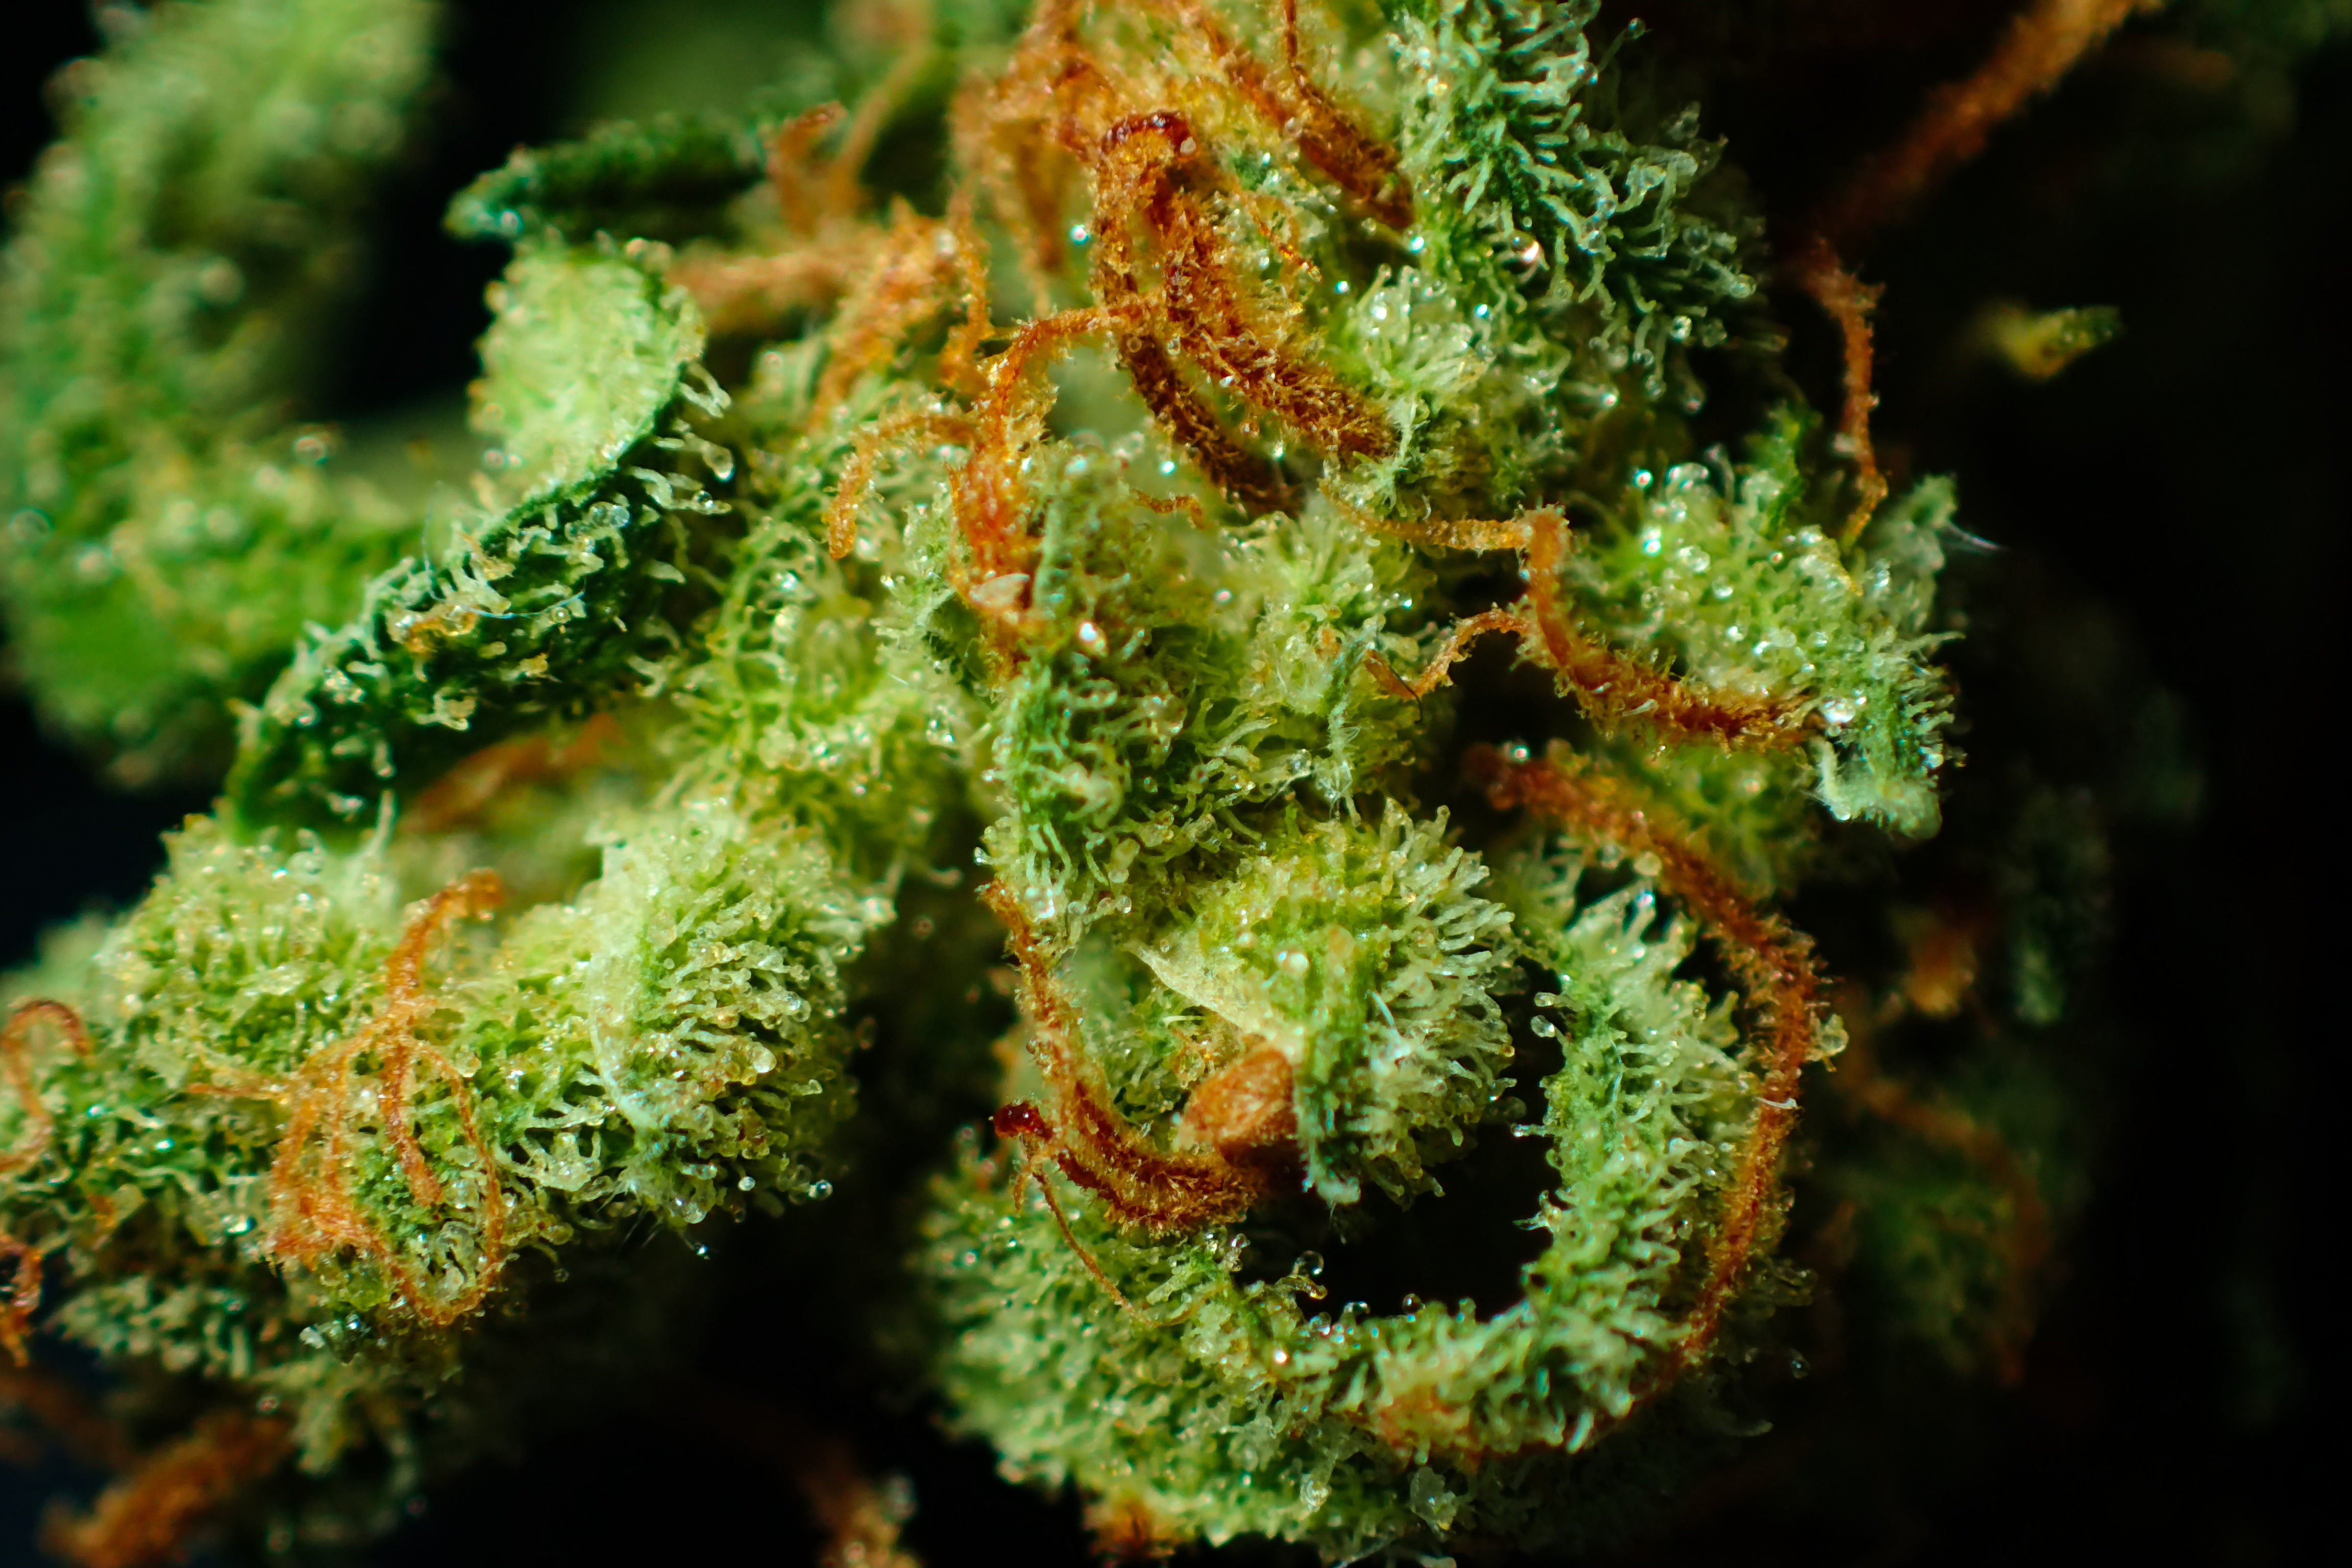 Closeup of marijuana flower bud.